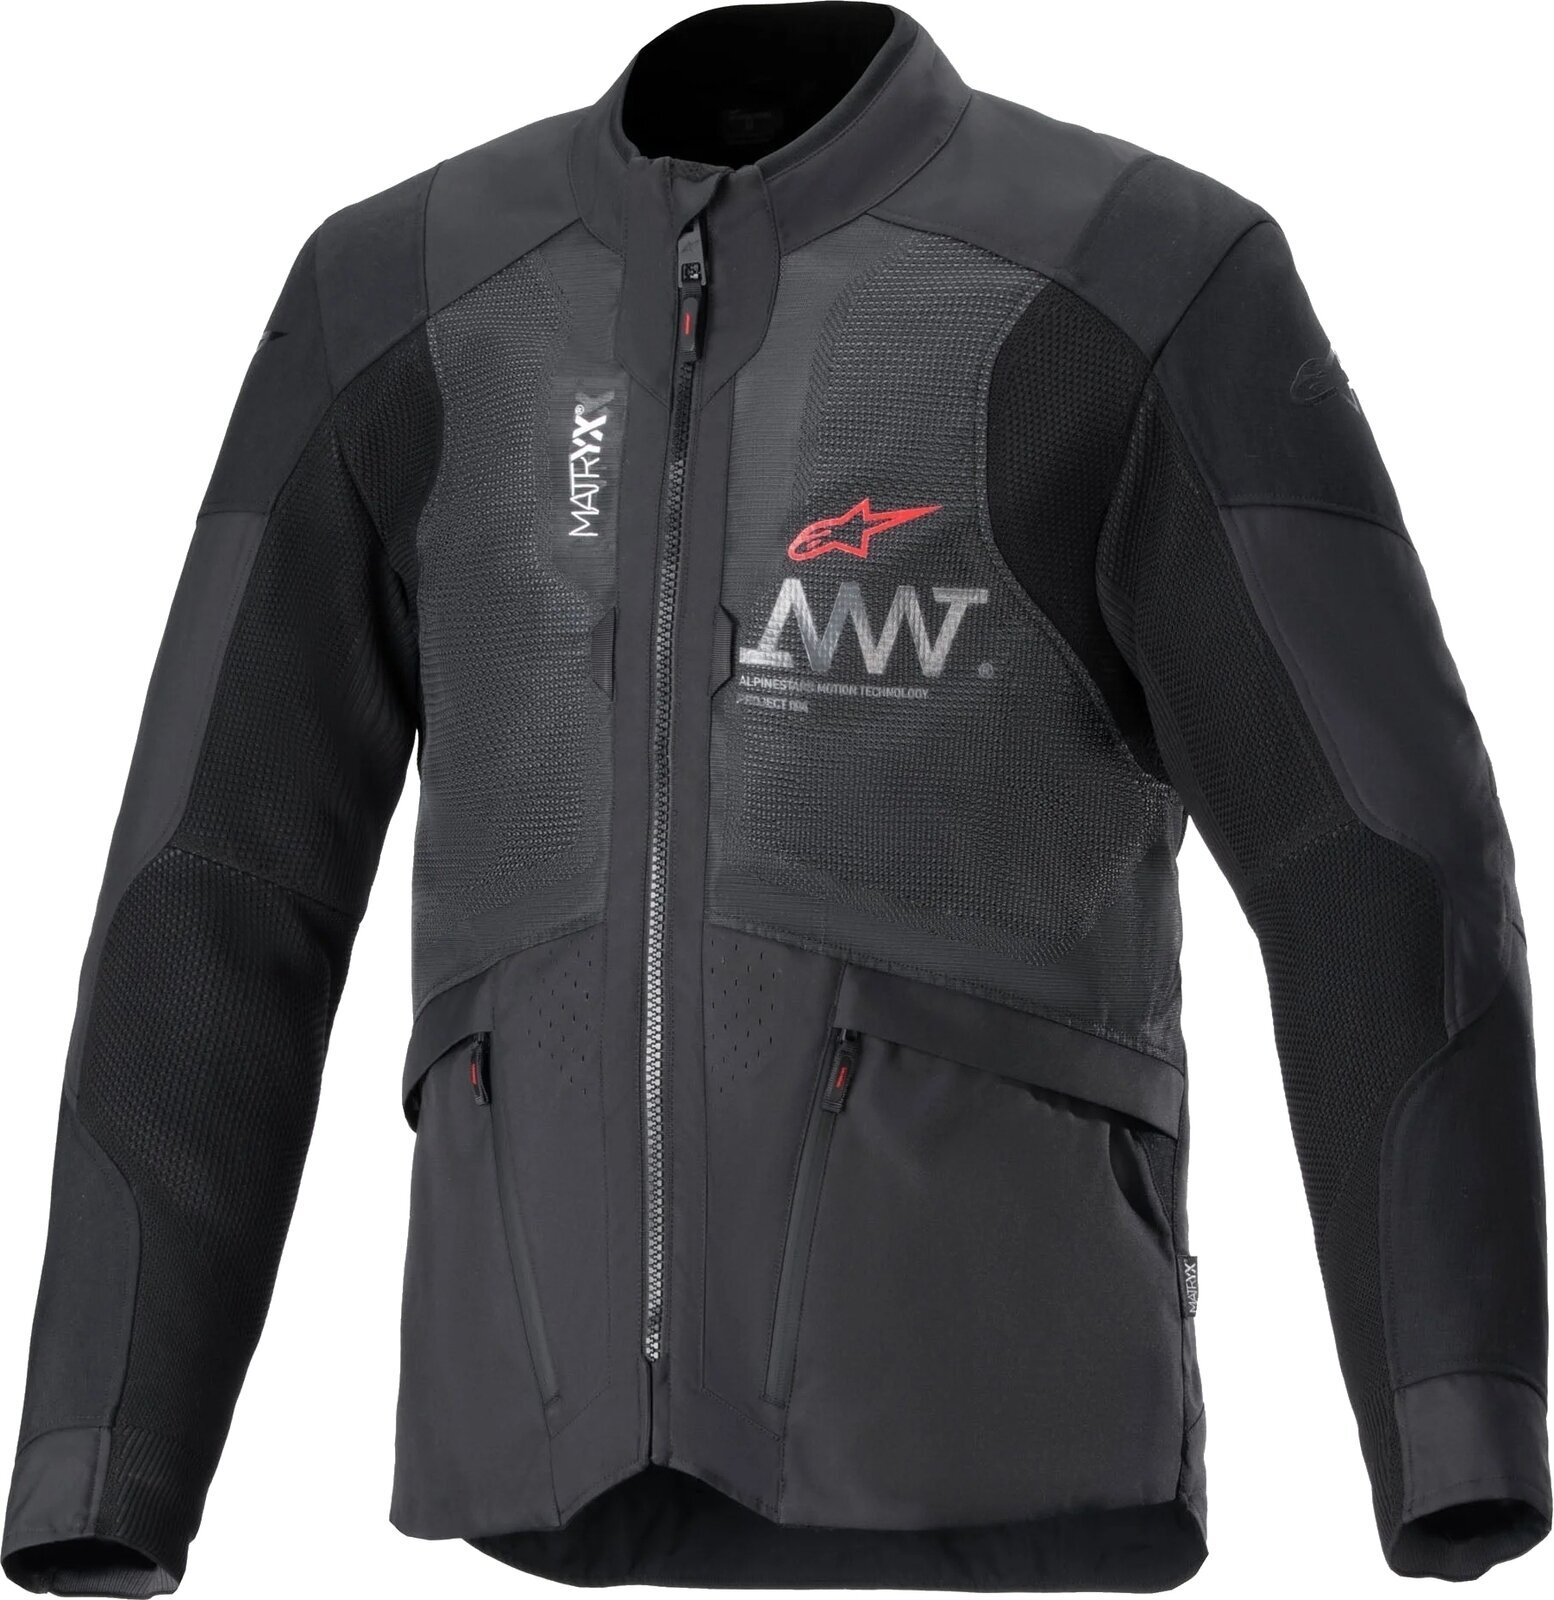 Textiele jas Alpinestars AMT-7 Air Jacket Black Dark/Shadow L Textiele jas